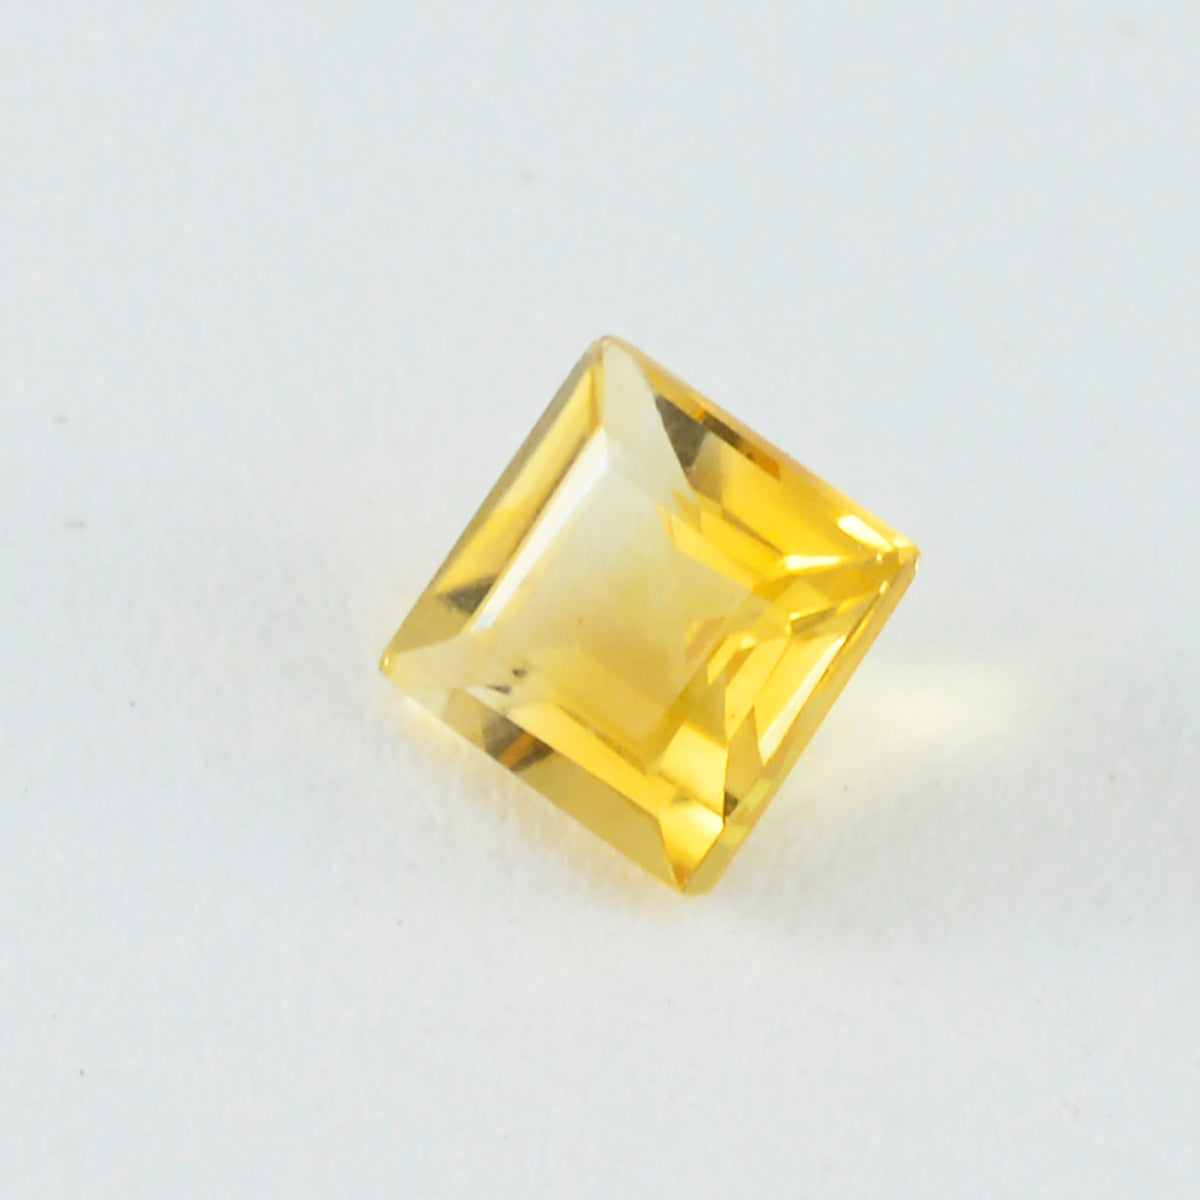 Riyogems 1PC Genuine Yellow Citrine Faceted 11x11 mm Square Shape excellent Quality Gem